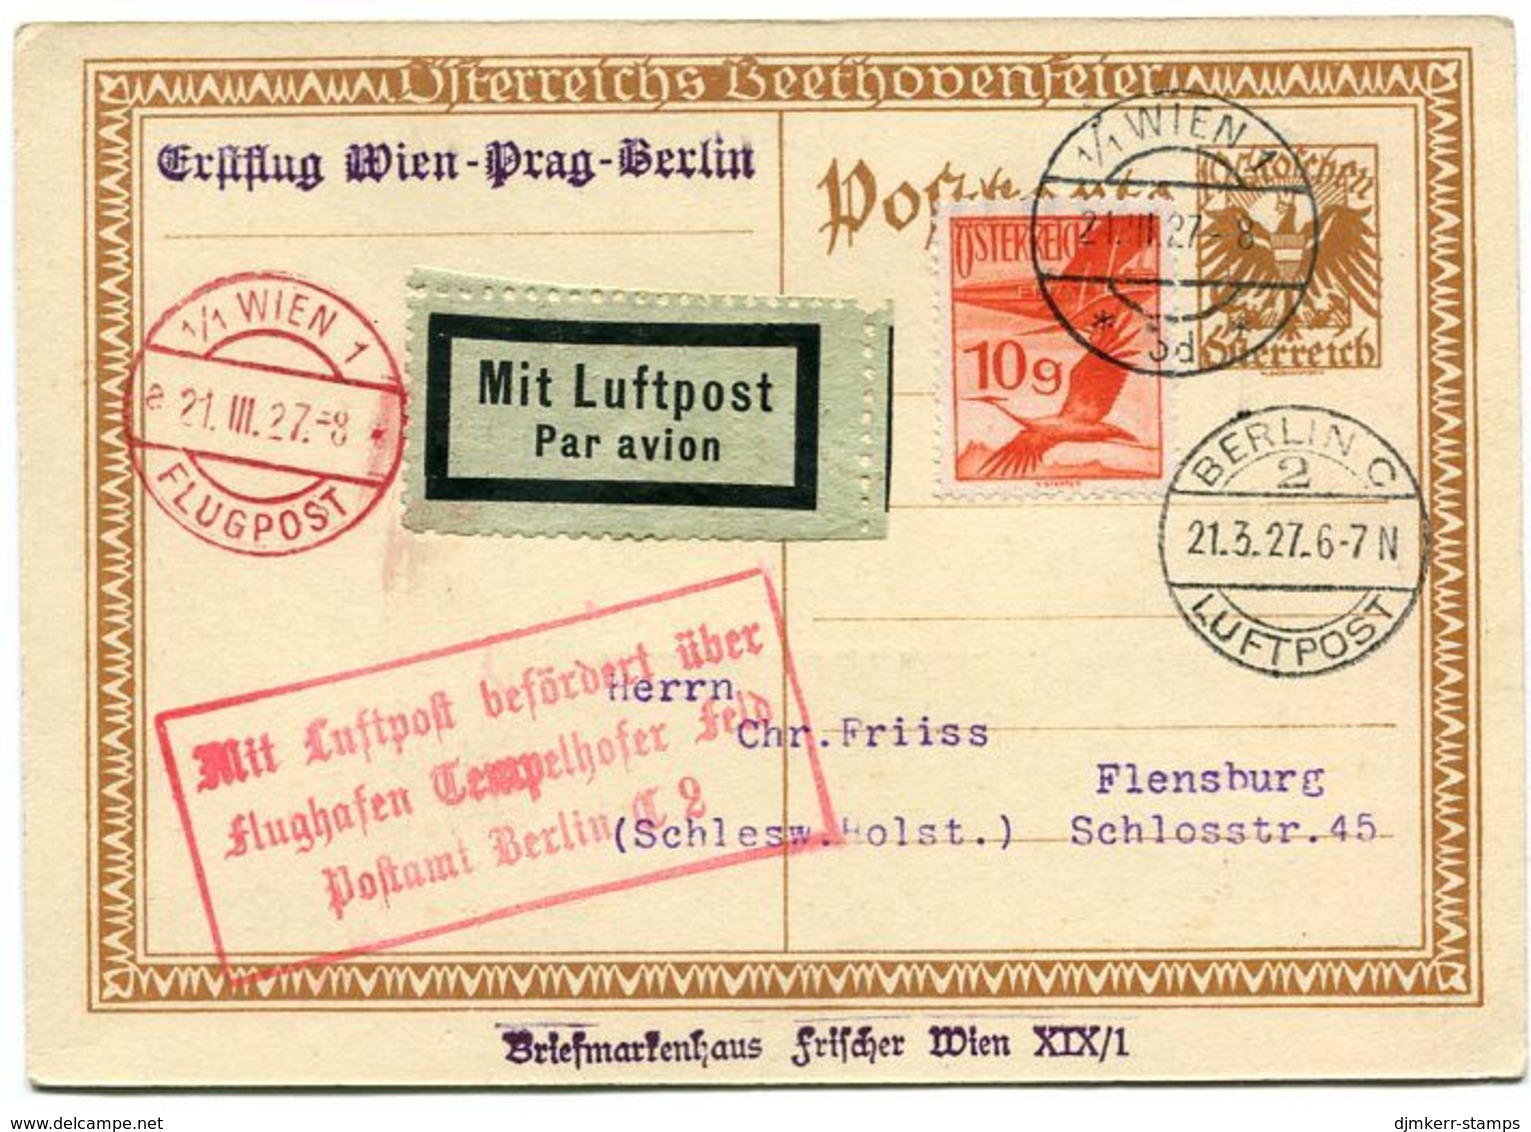 AUSTRIA 1927 First Flight Wien-Prague-Berlin On Postcard.  Beethoven Commemoration On Obverse. - Storia Postale